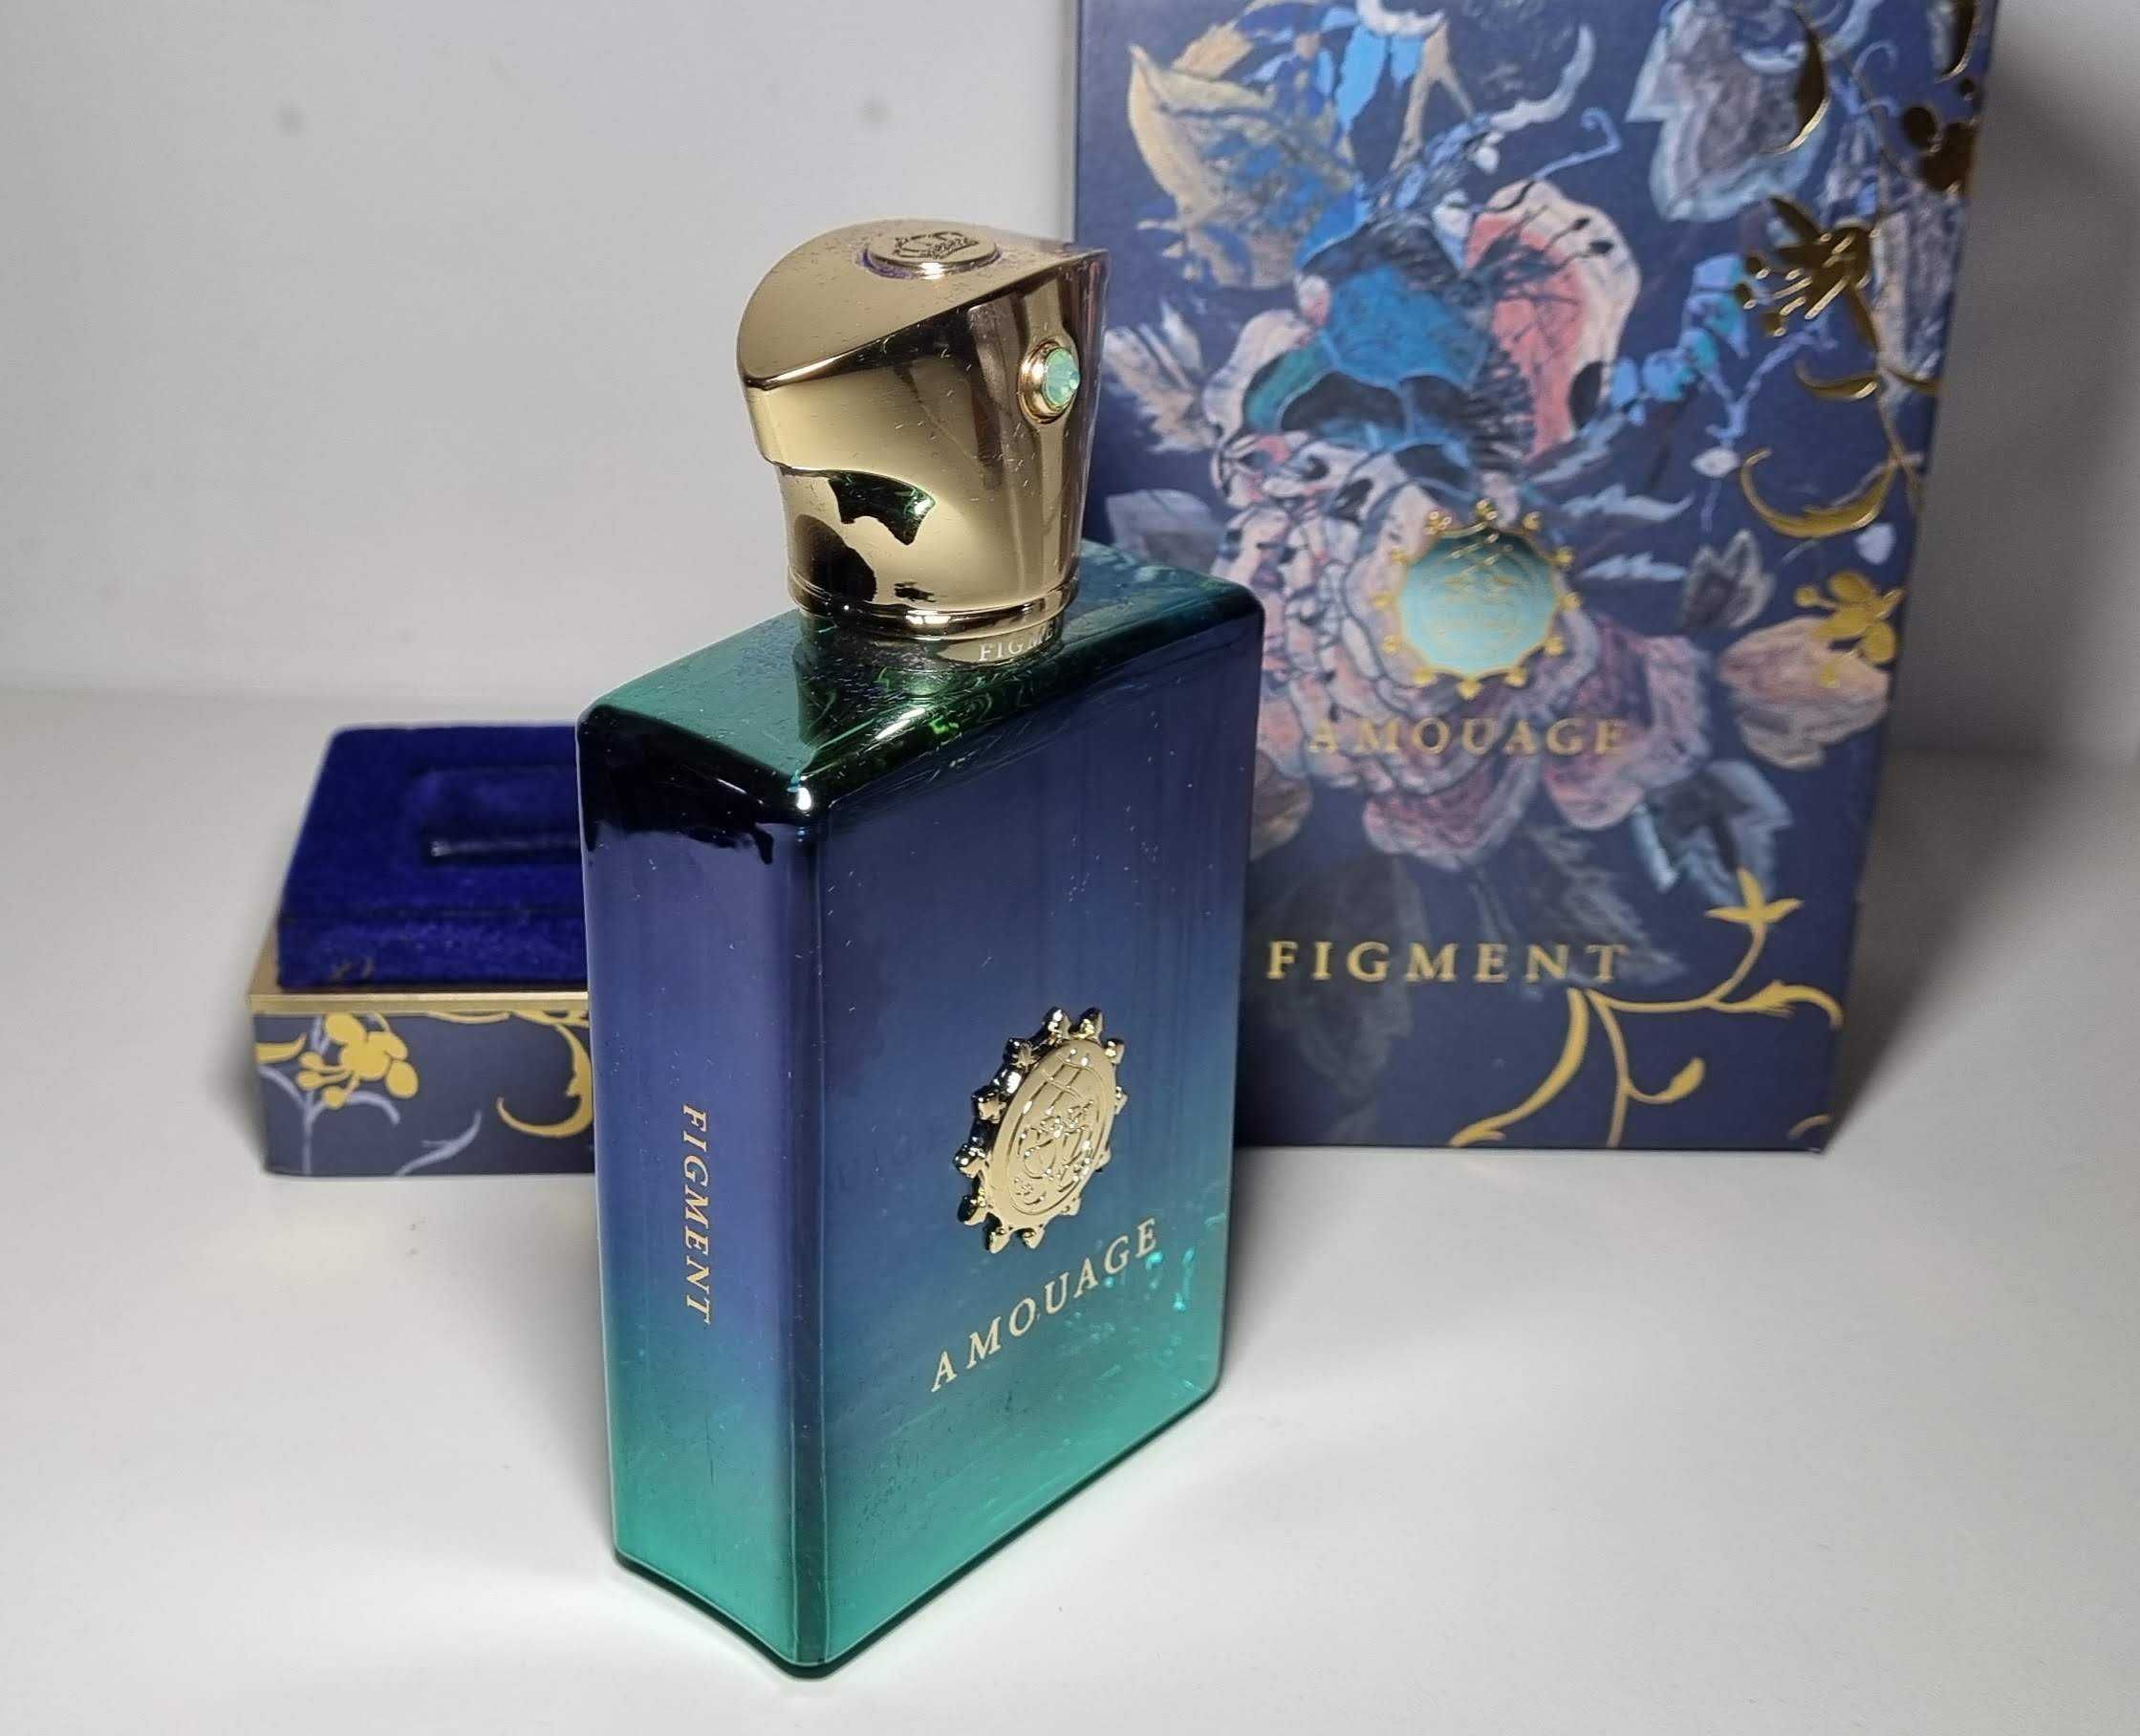 Parfum Amouage - Figment, for man, EDP, 100ml, sigilat